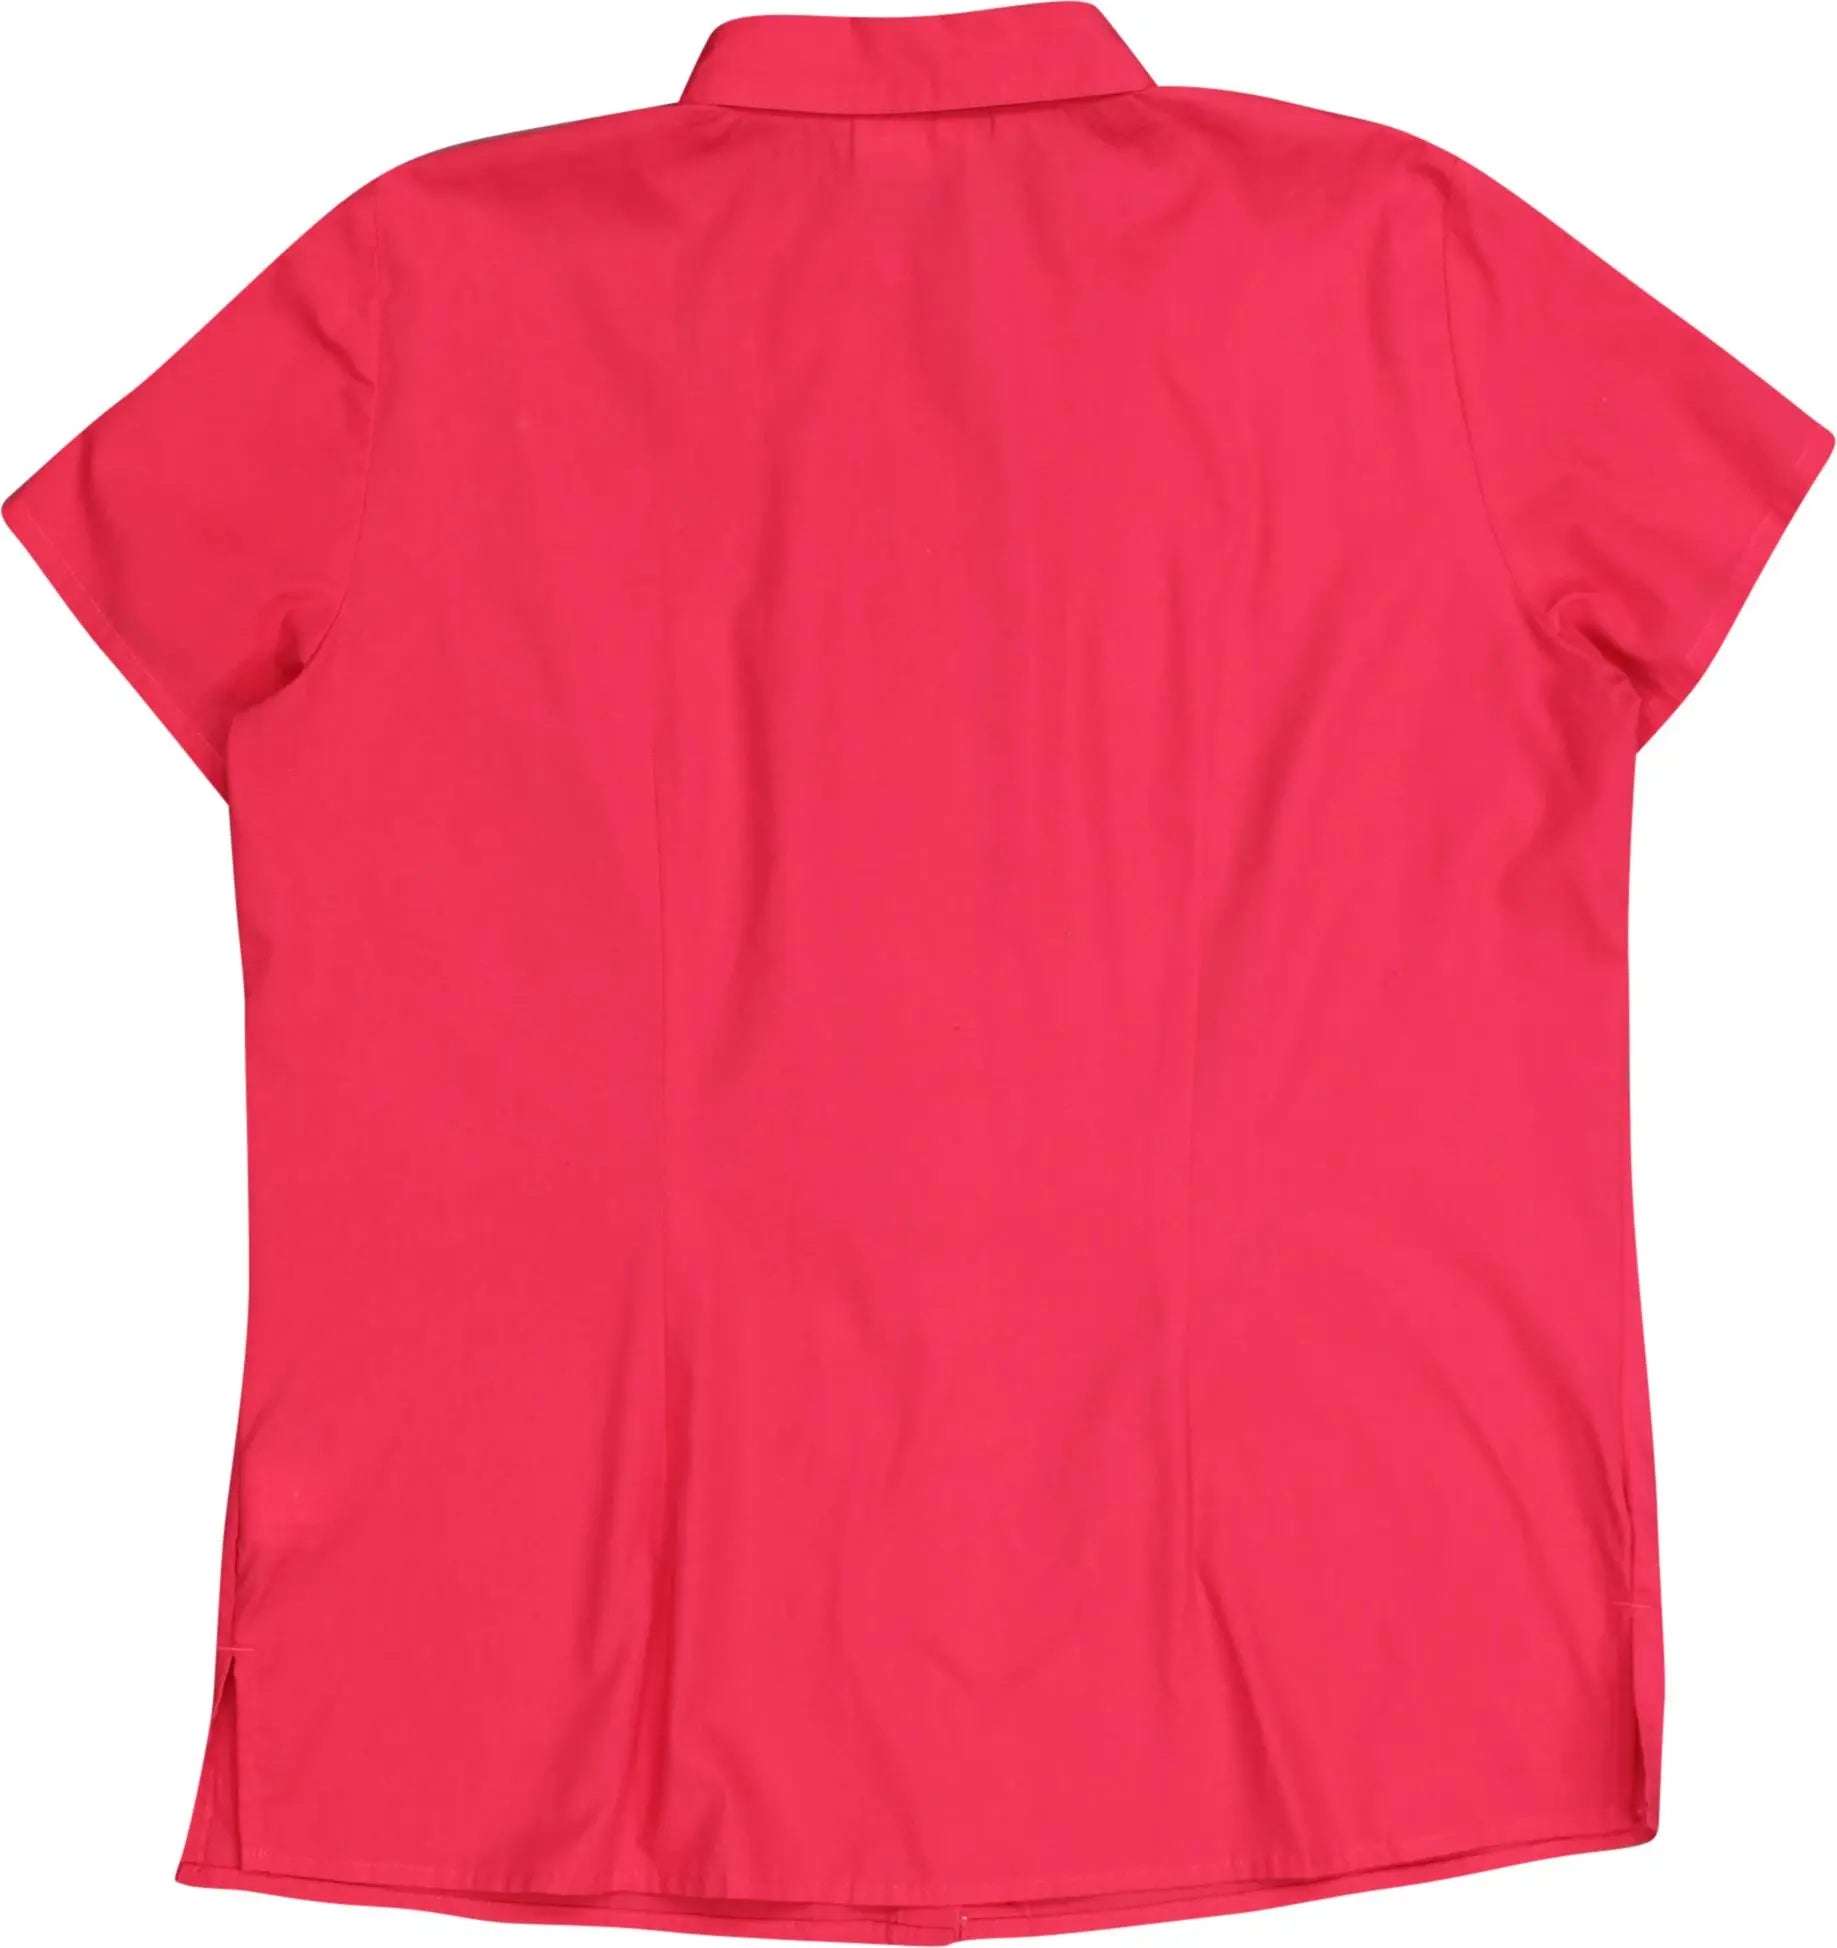 Bonprix - Pink Blouse- ThriftTale.com - Vintage and second handclothing